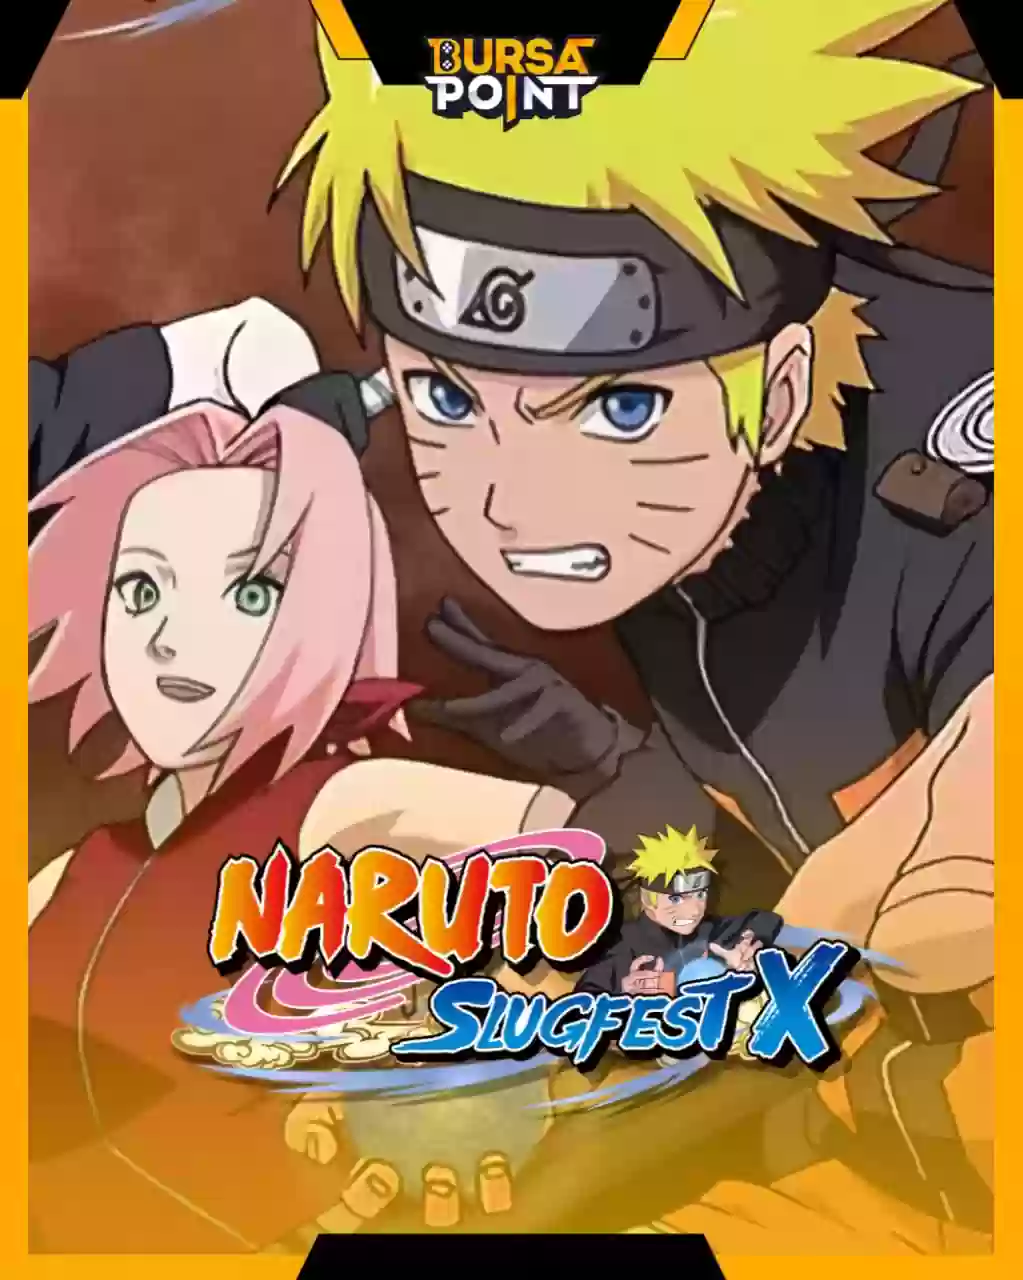 Naruto: Slugfest X Murah